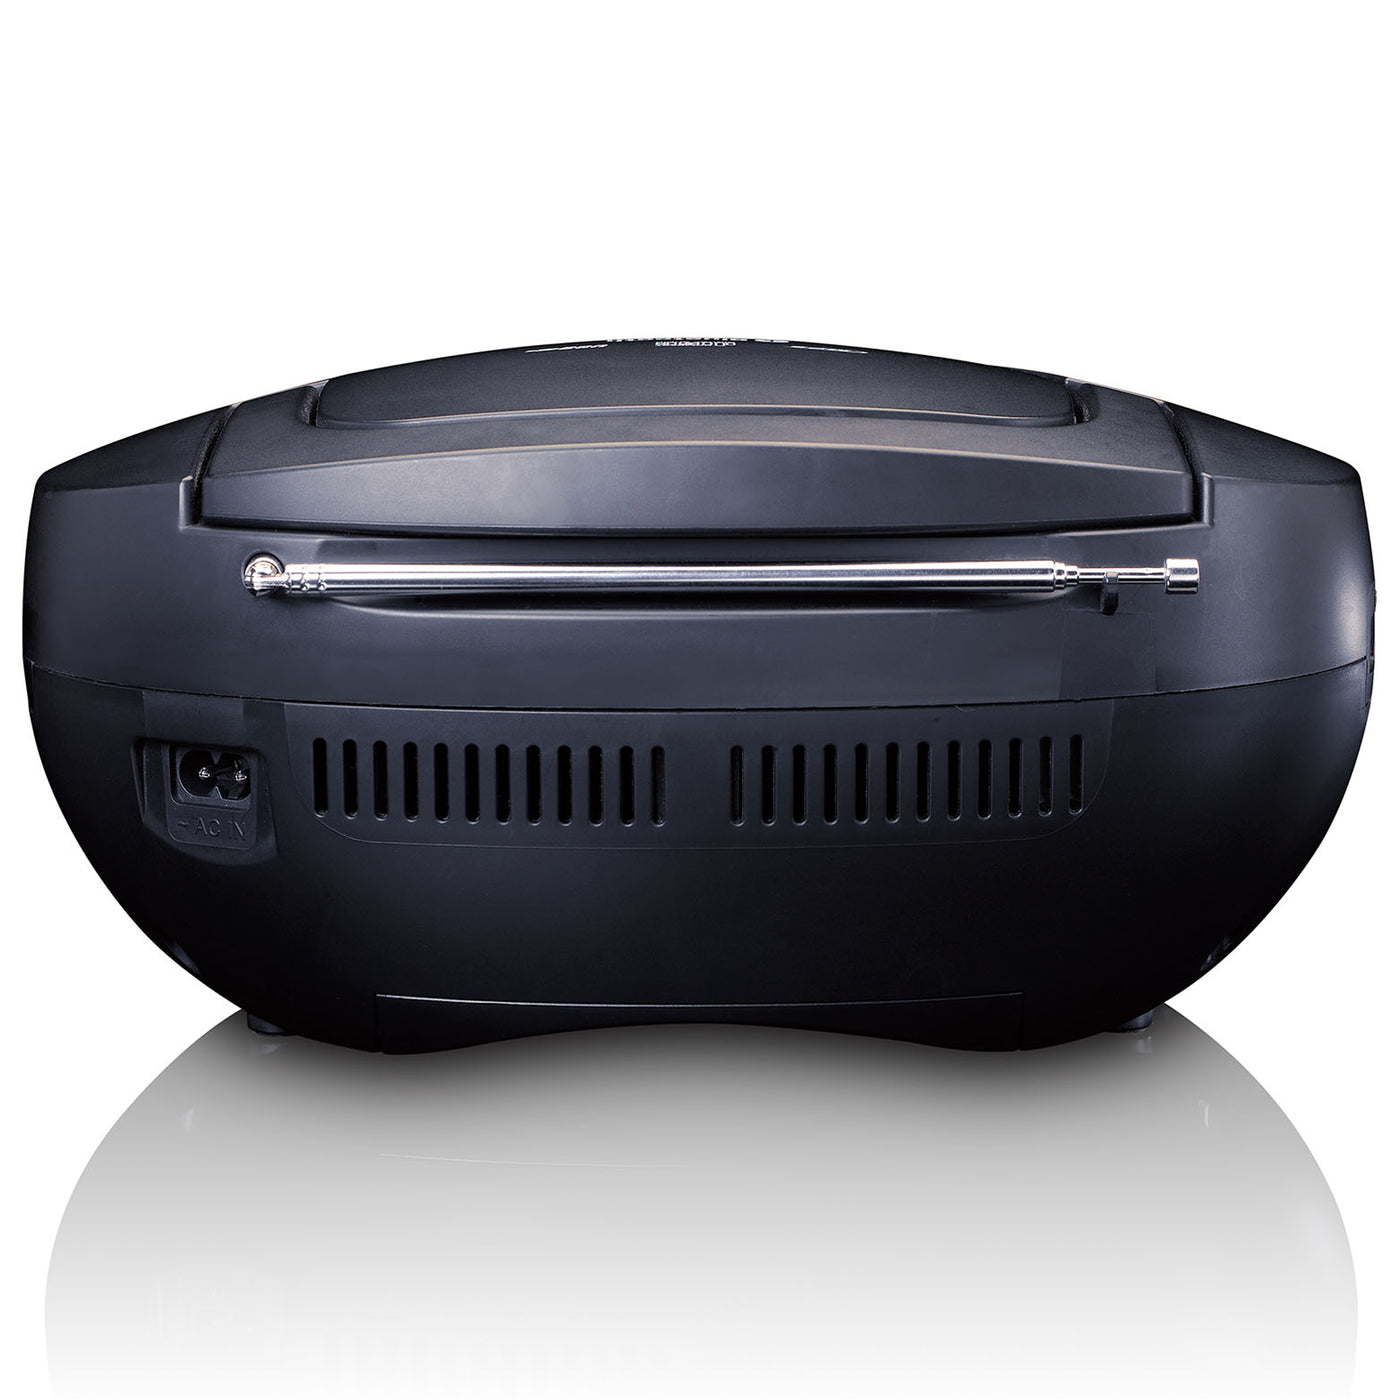 LENCO SCD-501RD Portable FM Radio CD-USB player with Bluetooth® - Red